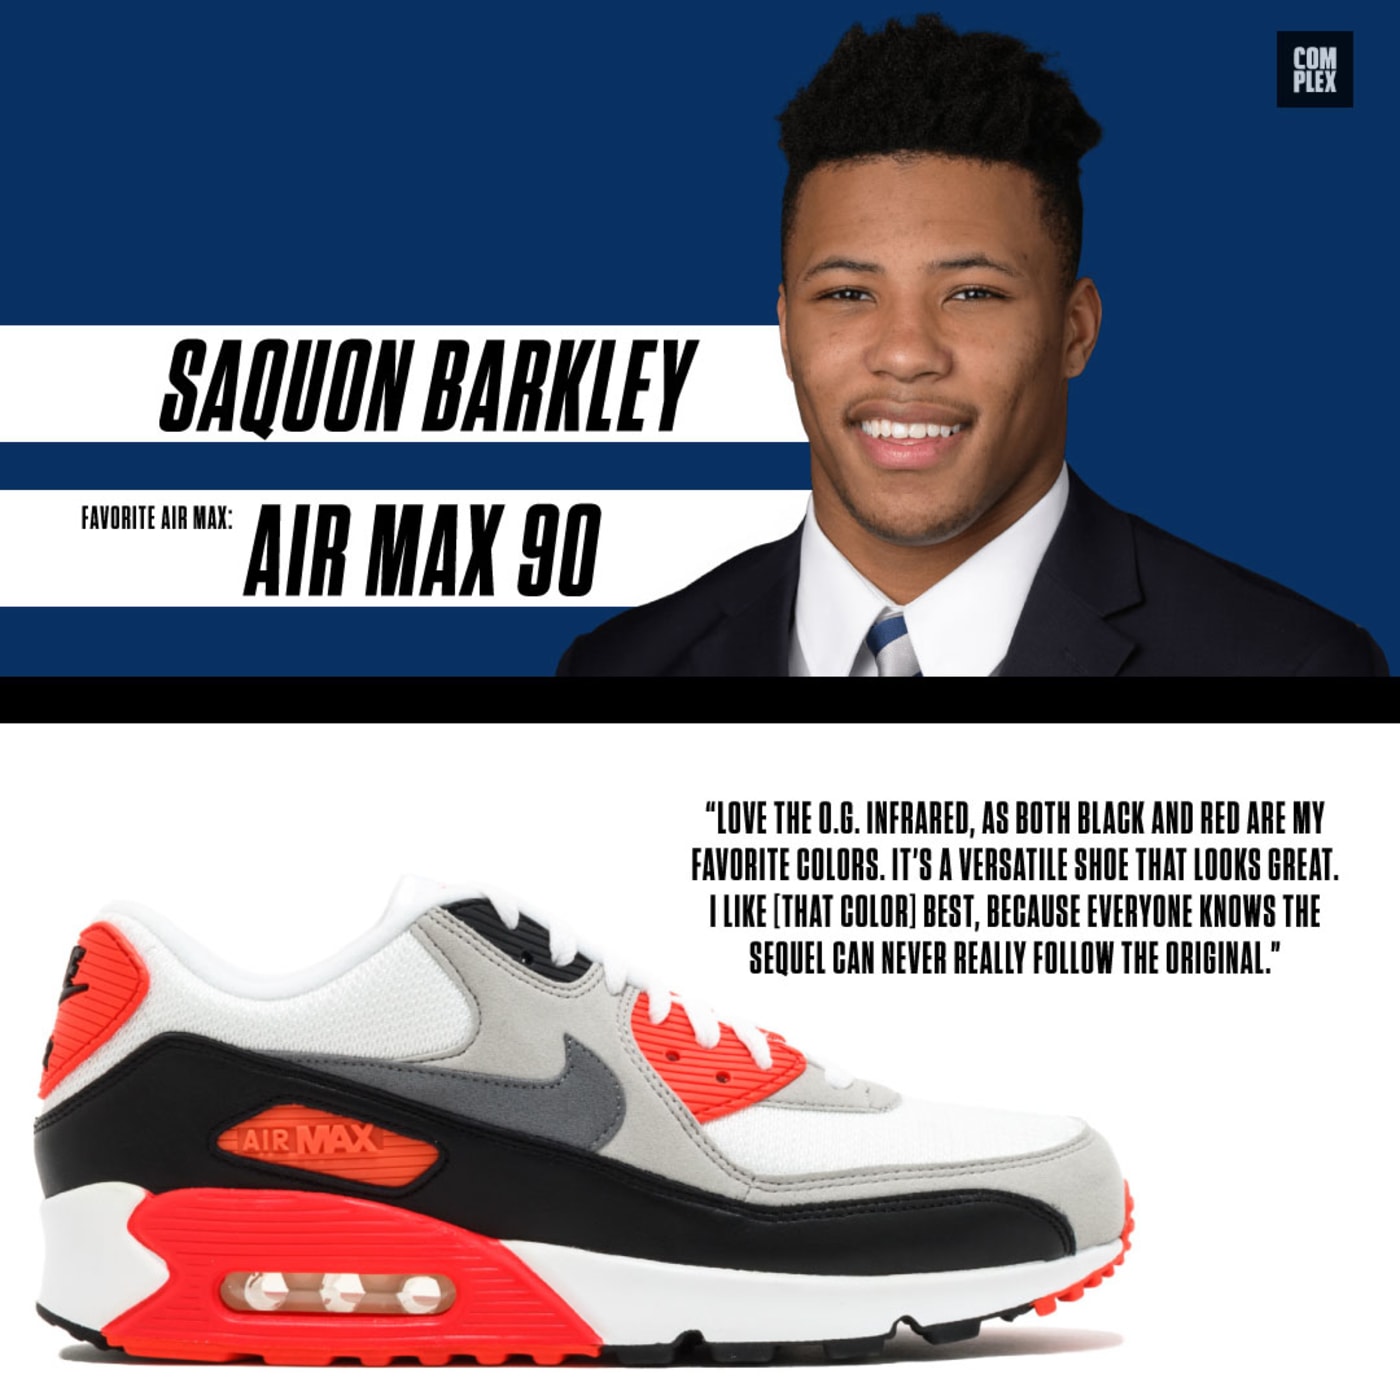 saquon barkley nike shoes